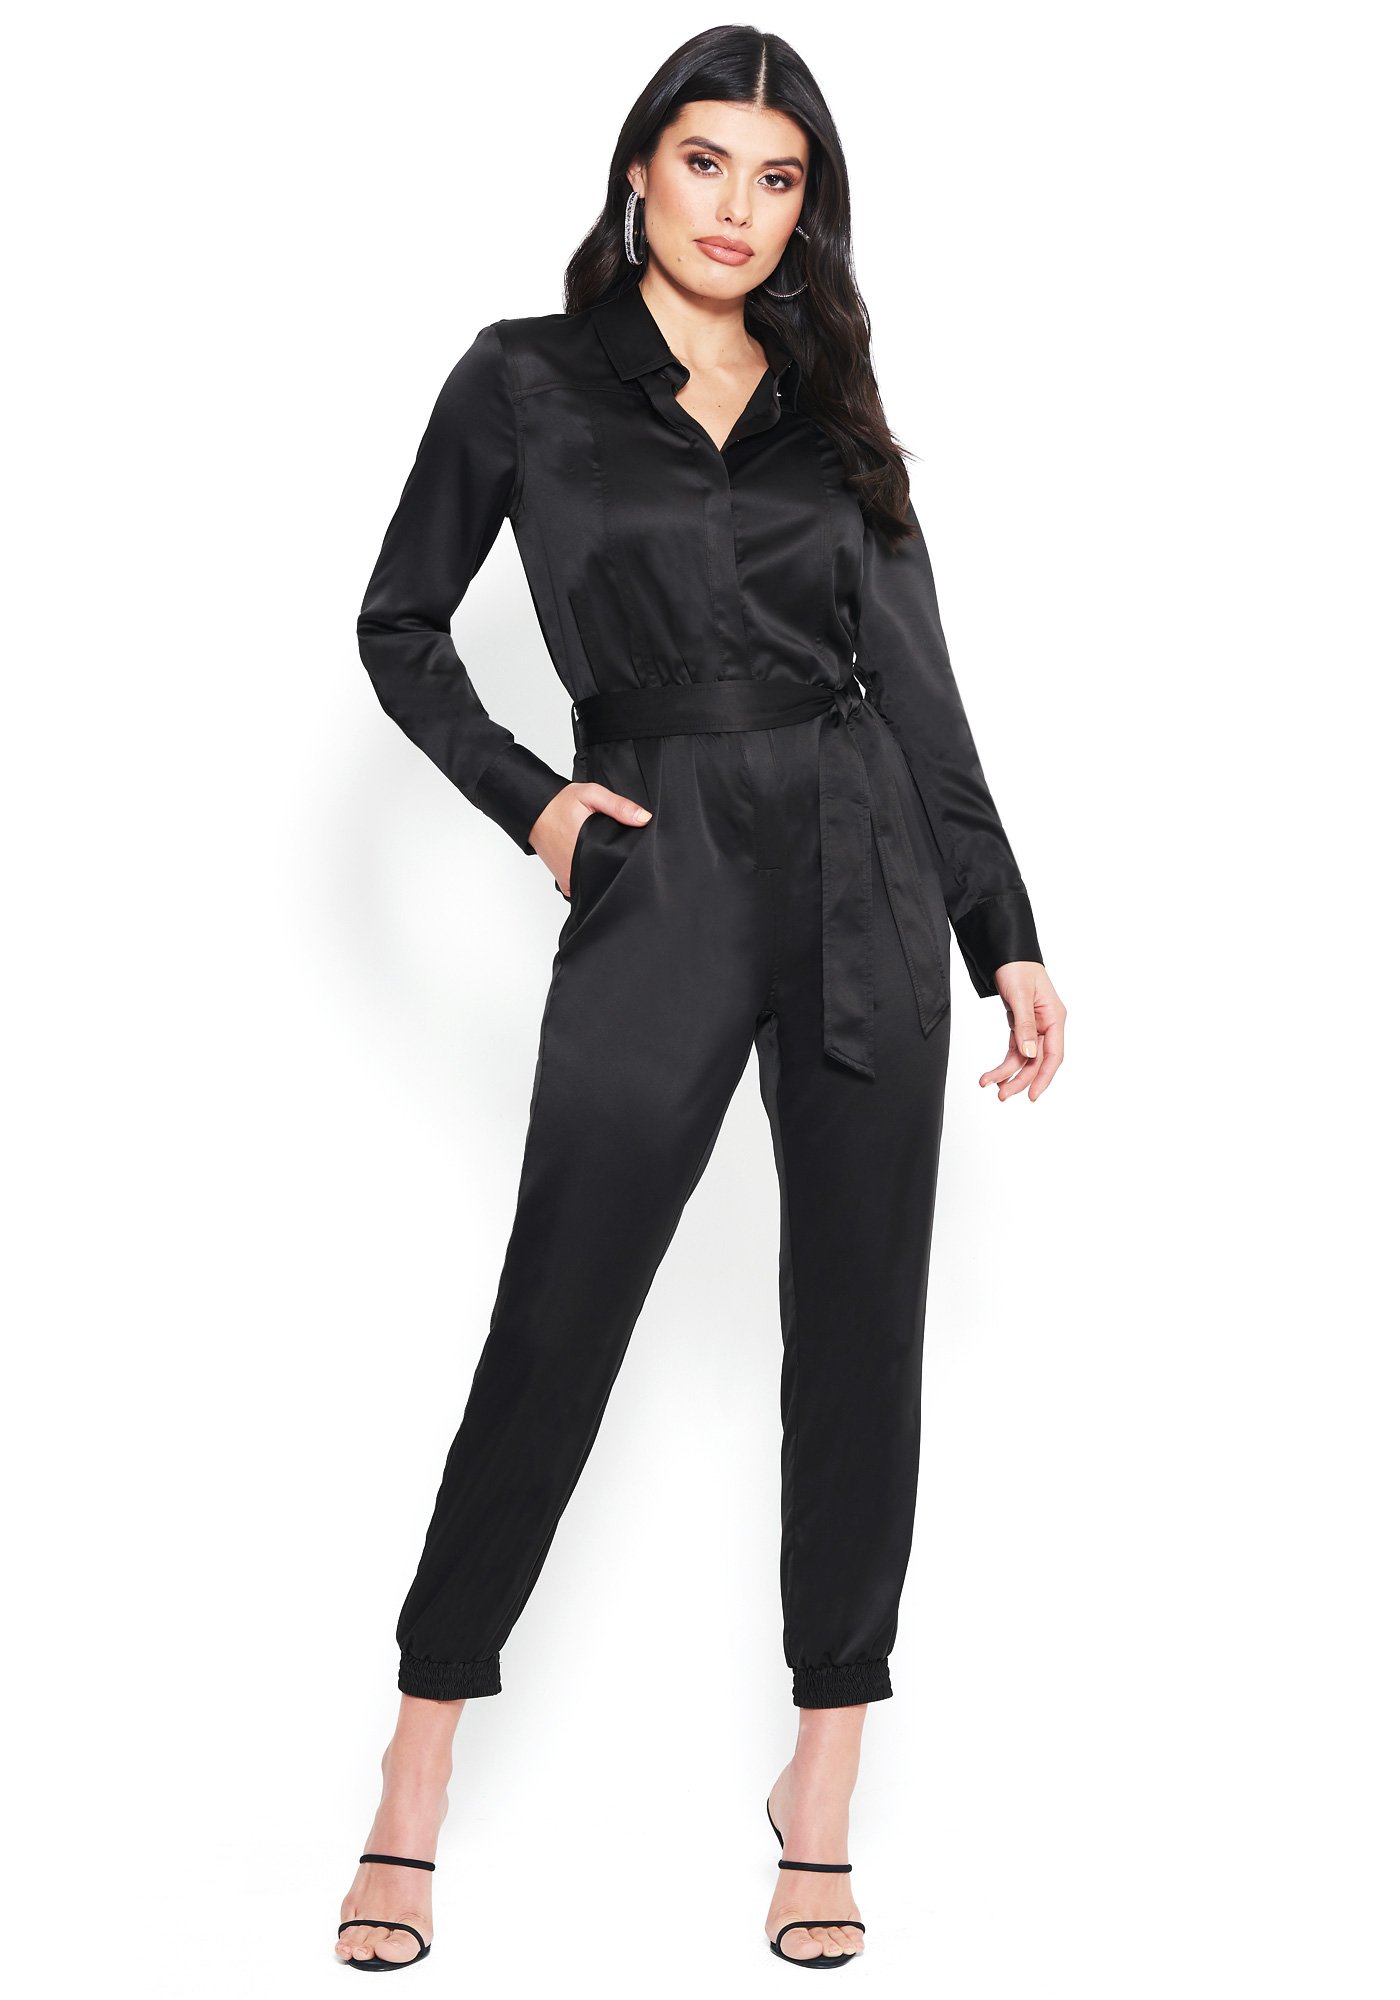 Bebe Women's Button Up Jumpsuit, Size XS in Black Spandex